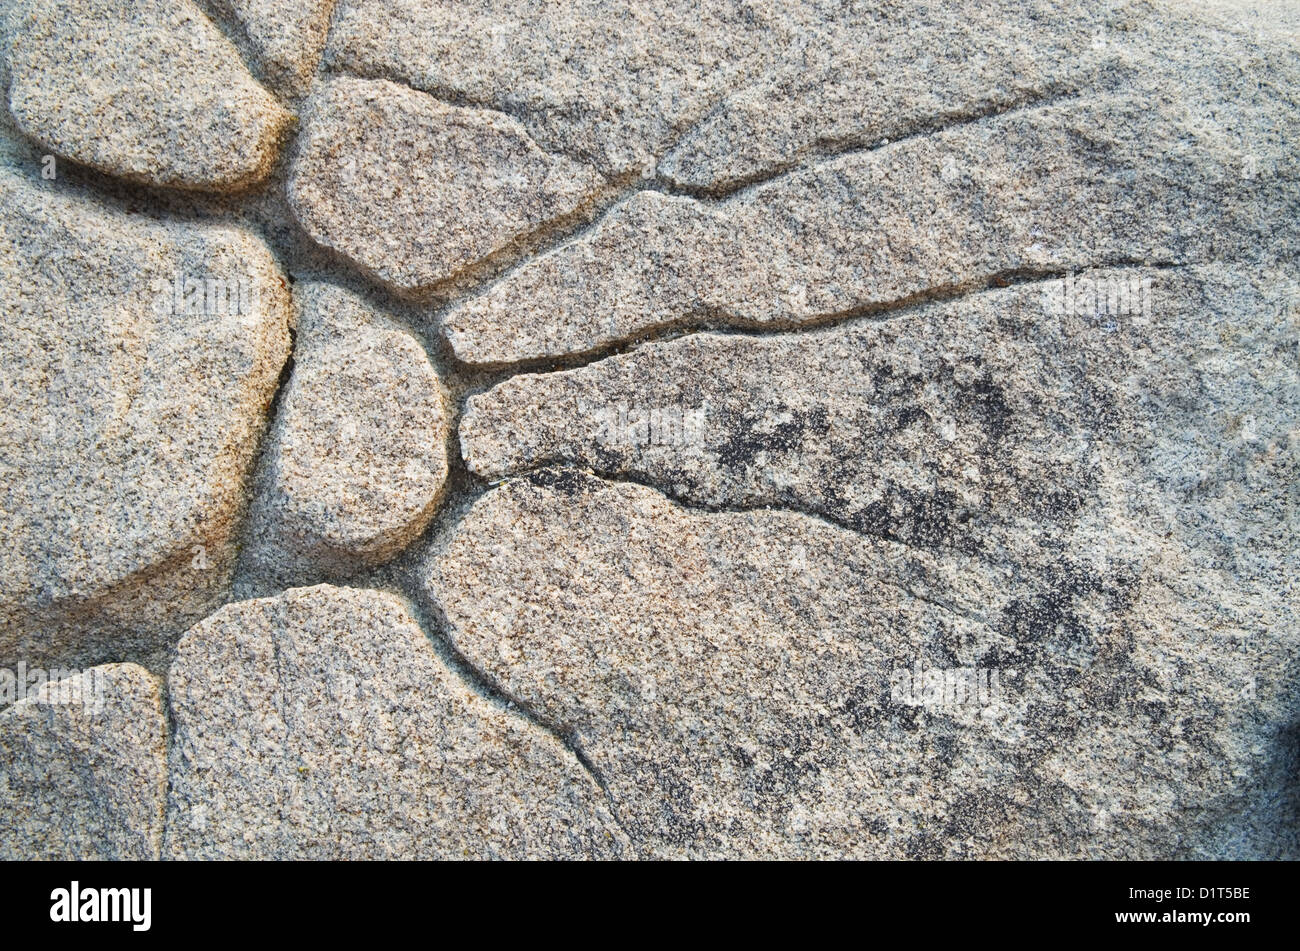 natural sunburst pattern eroded in granite rock Stock Photo